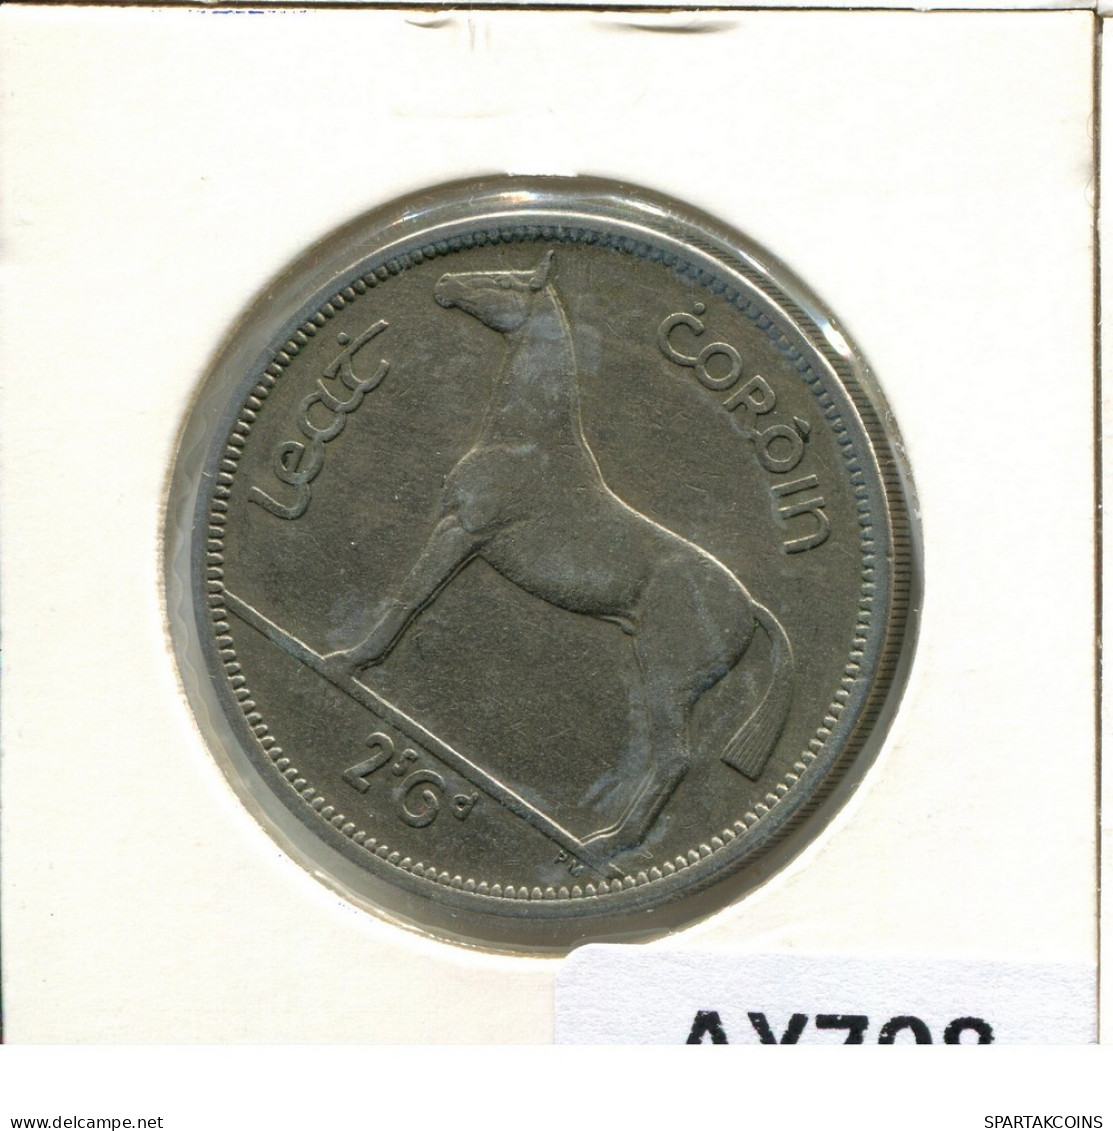 1/2 CROWN 1954 IRELAND Coin #AY708.U.A - Ierland